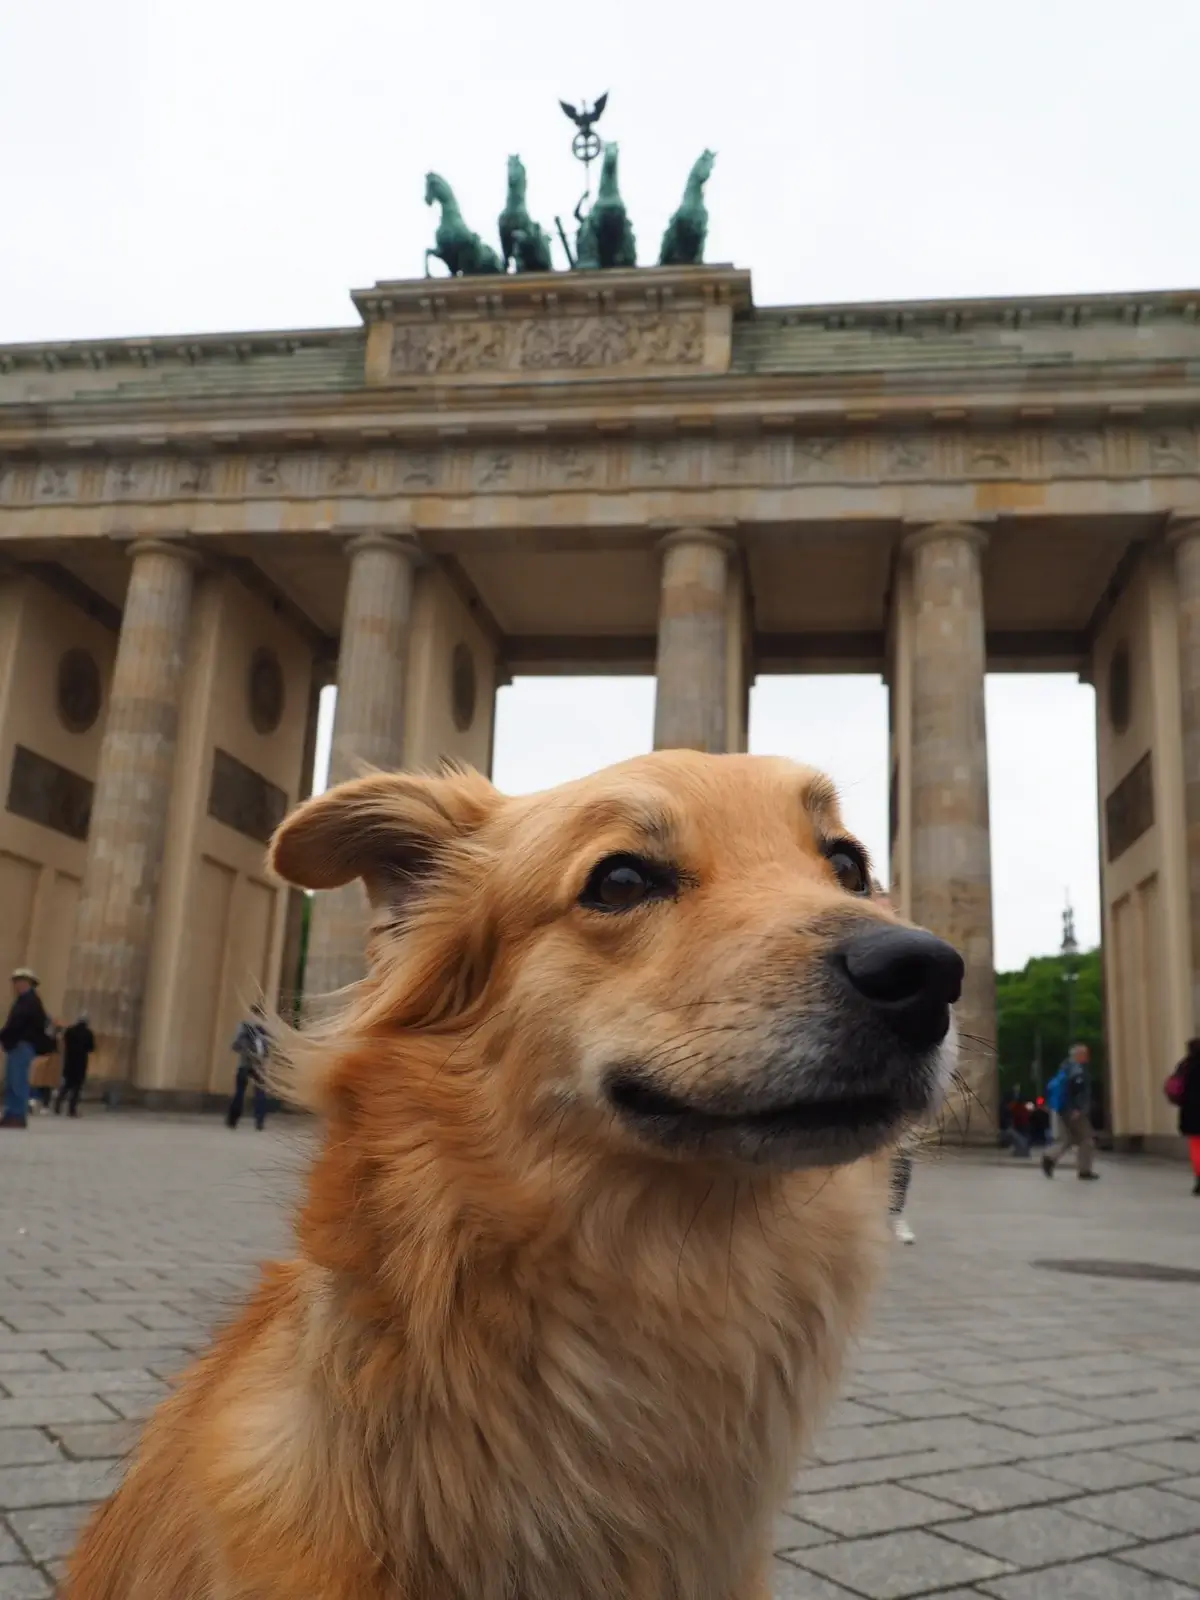 Berlin is a dog-friendly city